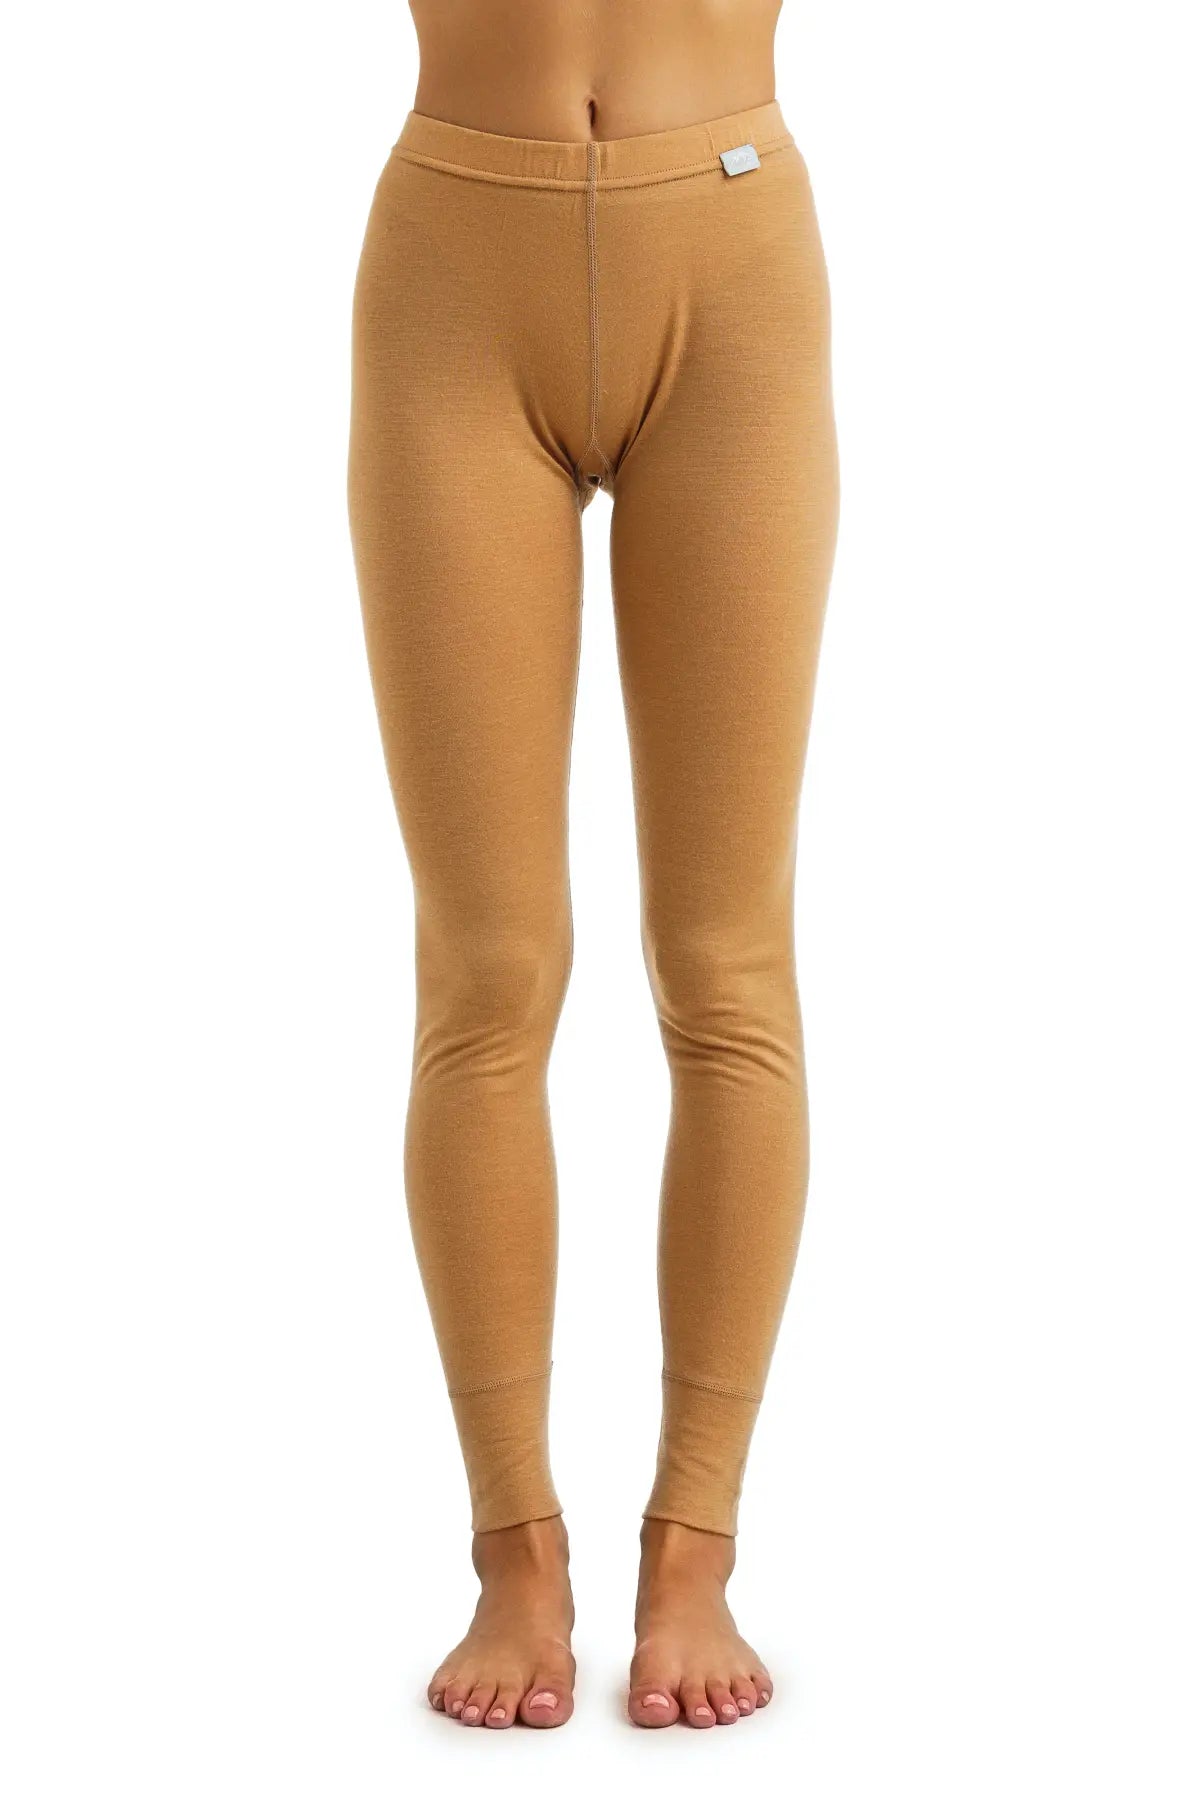 Women's Merino Wool Pants - Base Layer Leggings Camel, Bottom, Underwear, Thermal, Lightweight